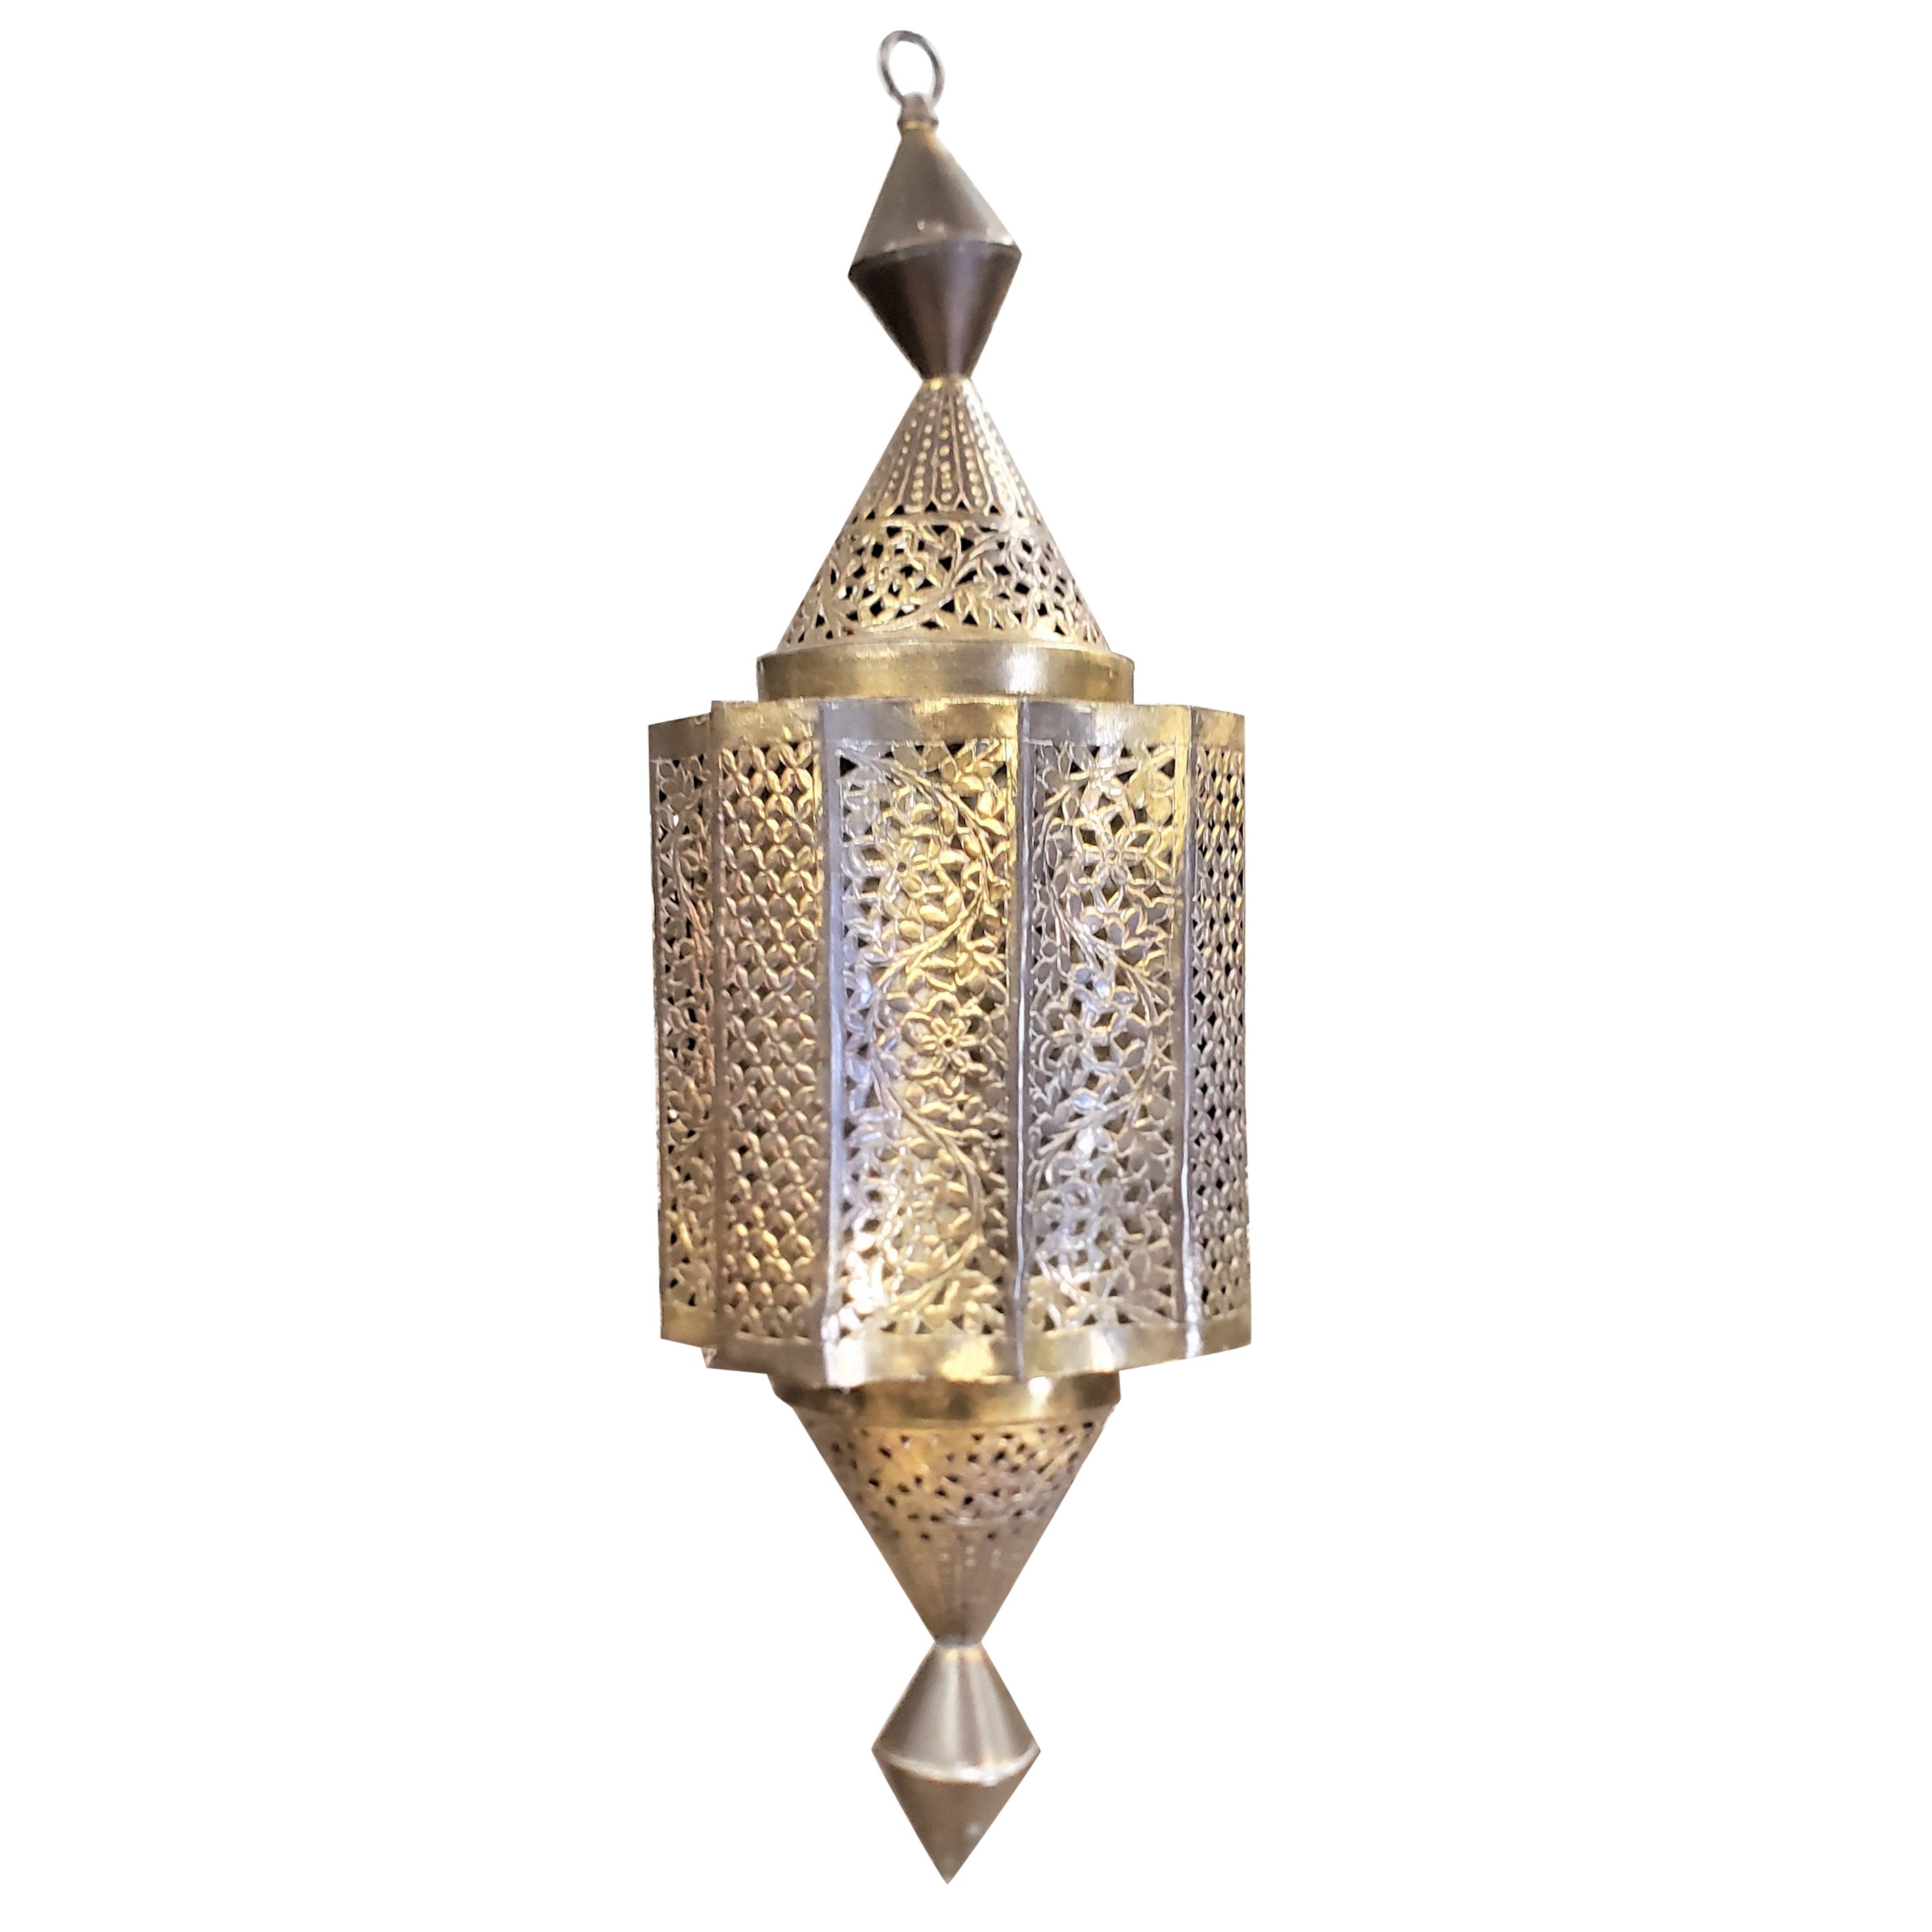 Mid-Century Large Moroccan Moorish Pierced Brass Hanging Lantern or Swag Light